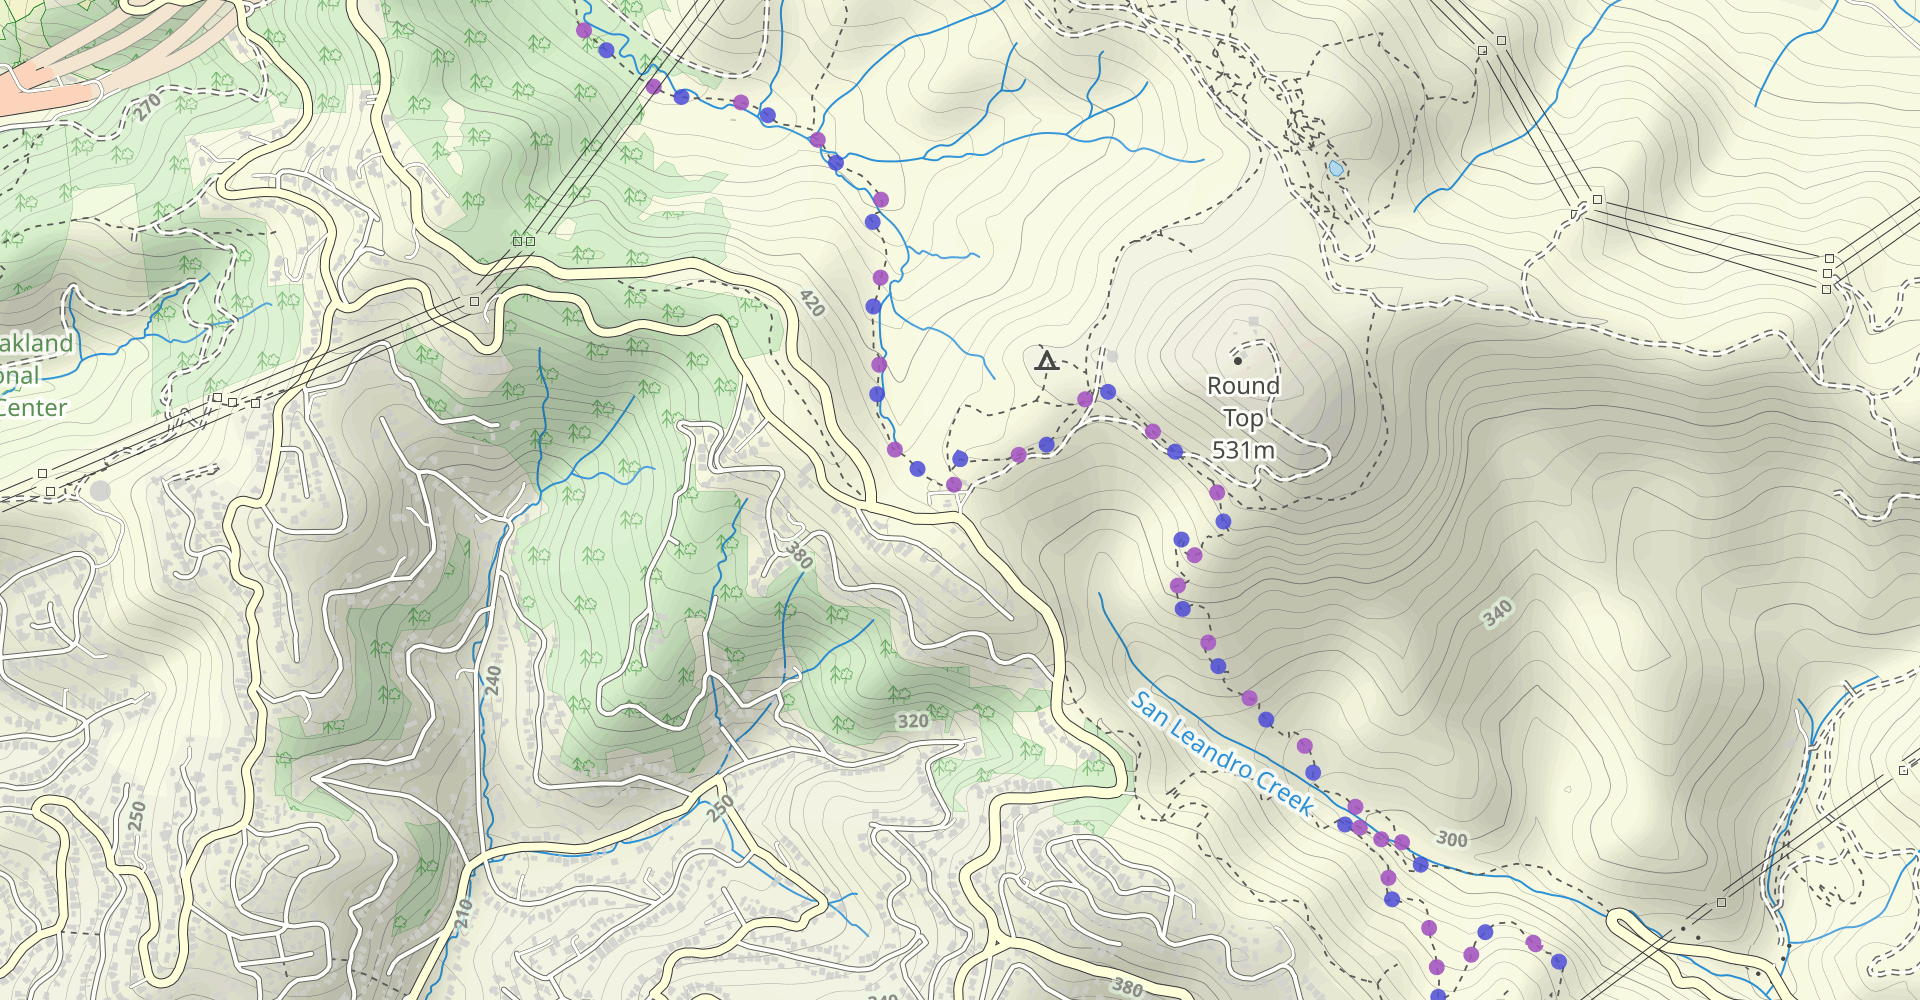 Bay Area Ridge, Round Top Loop, and Volcanic Trail Loop